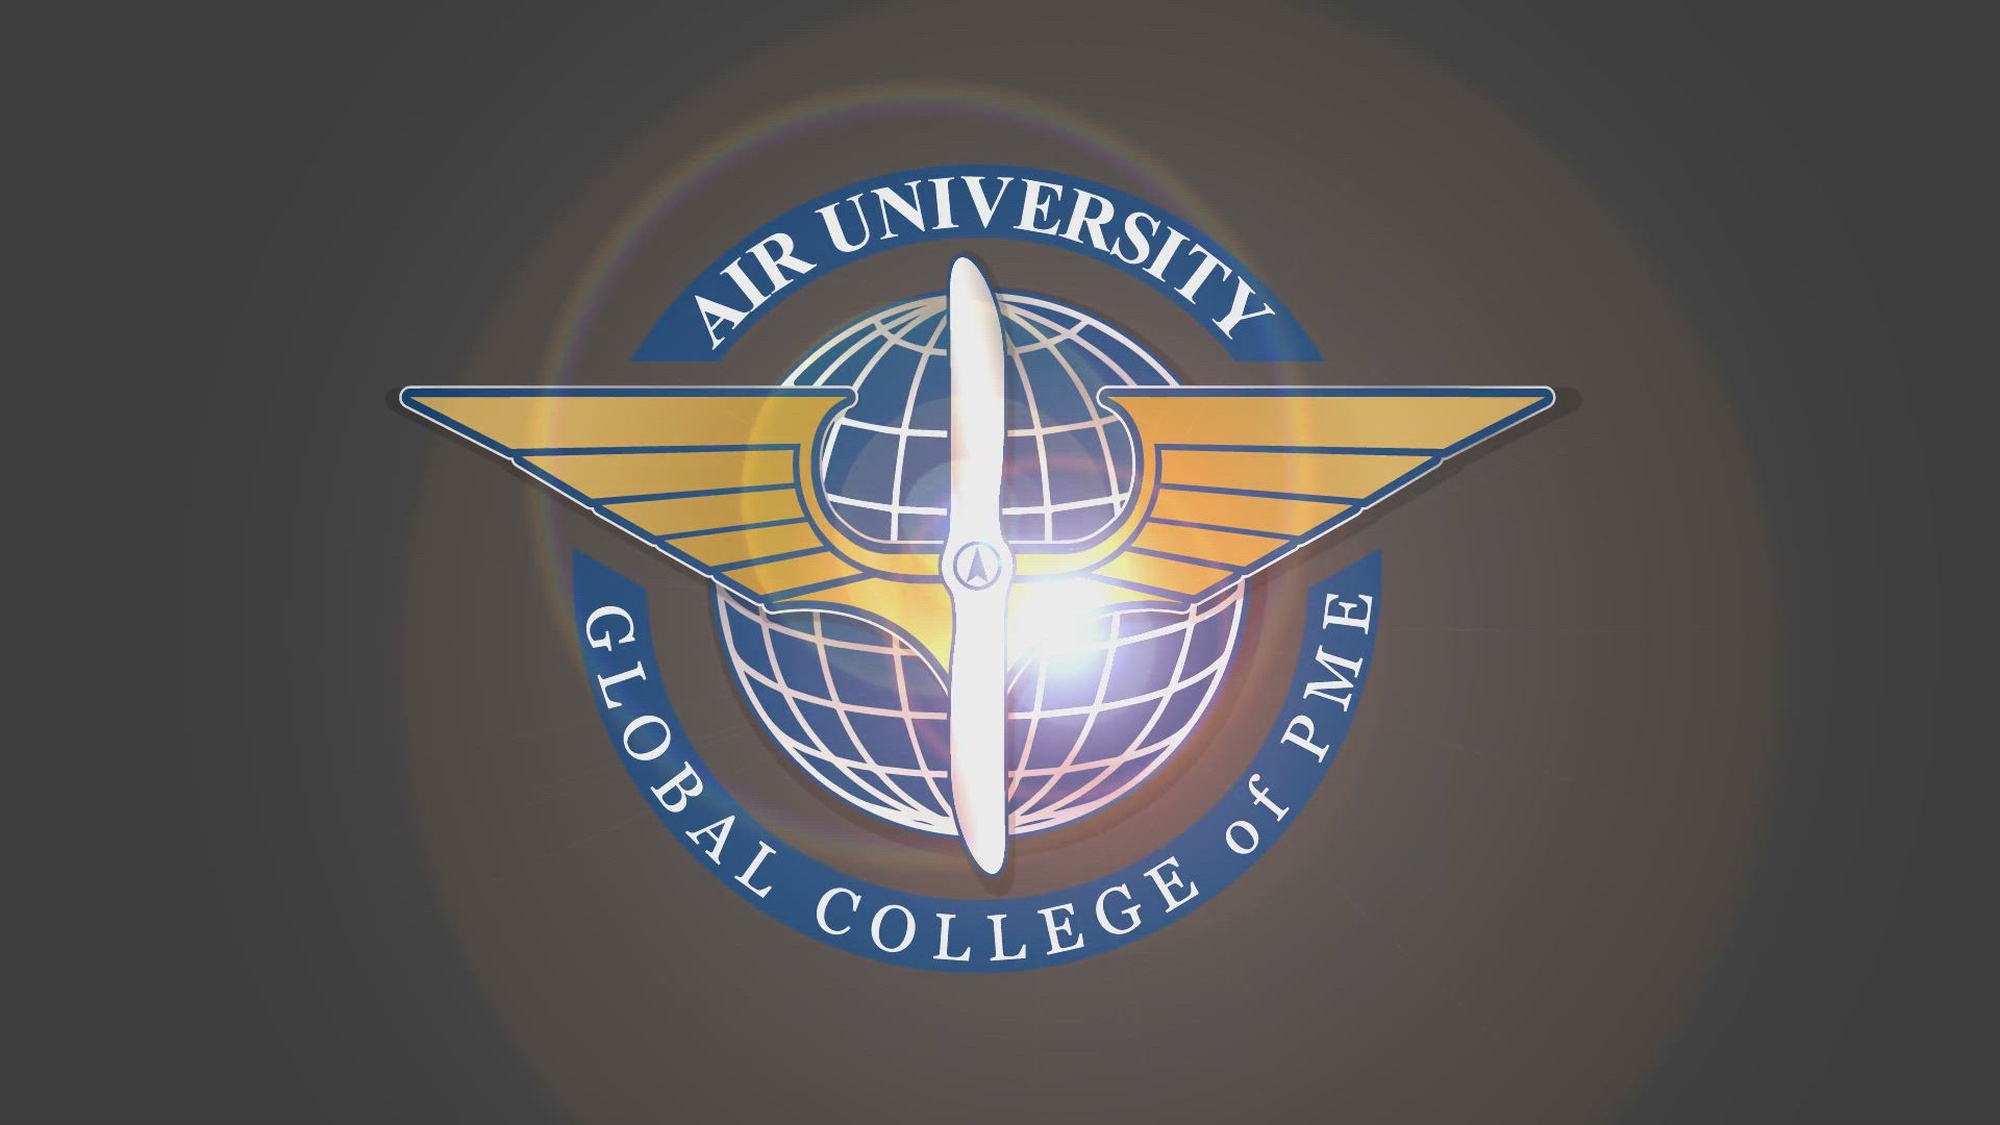 For more information on the eSchool of Graduate PME, visit https://www.airuniversity.af.edu/eSchool.